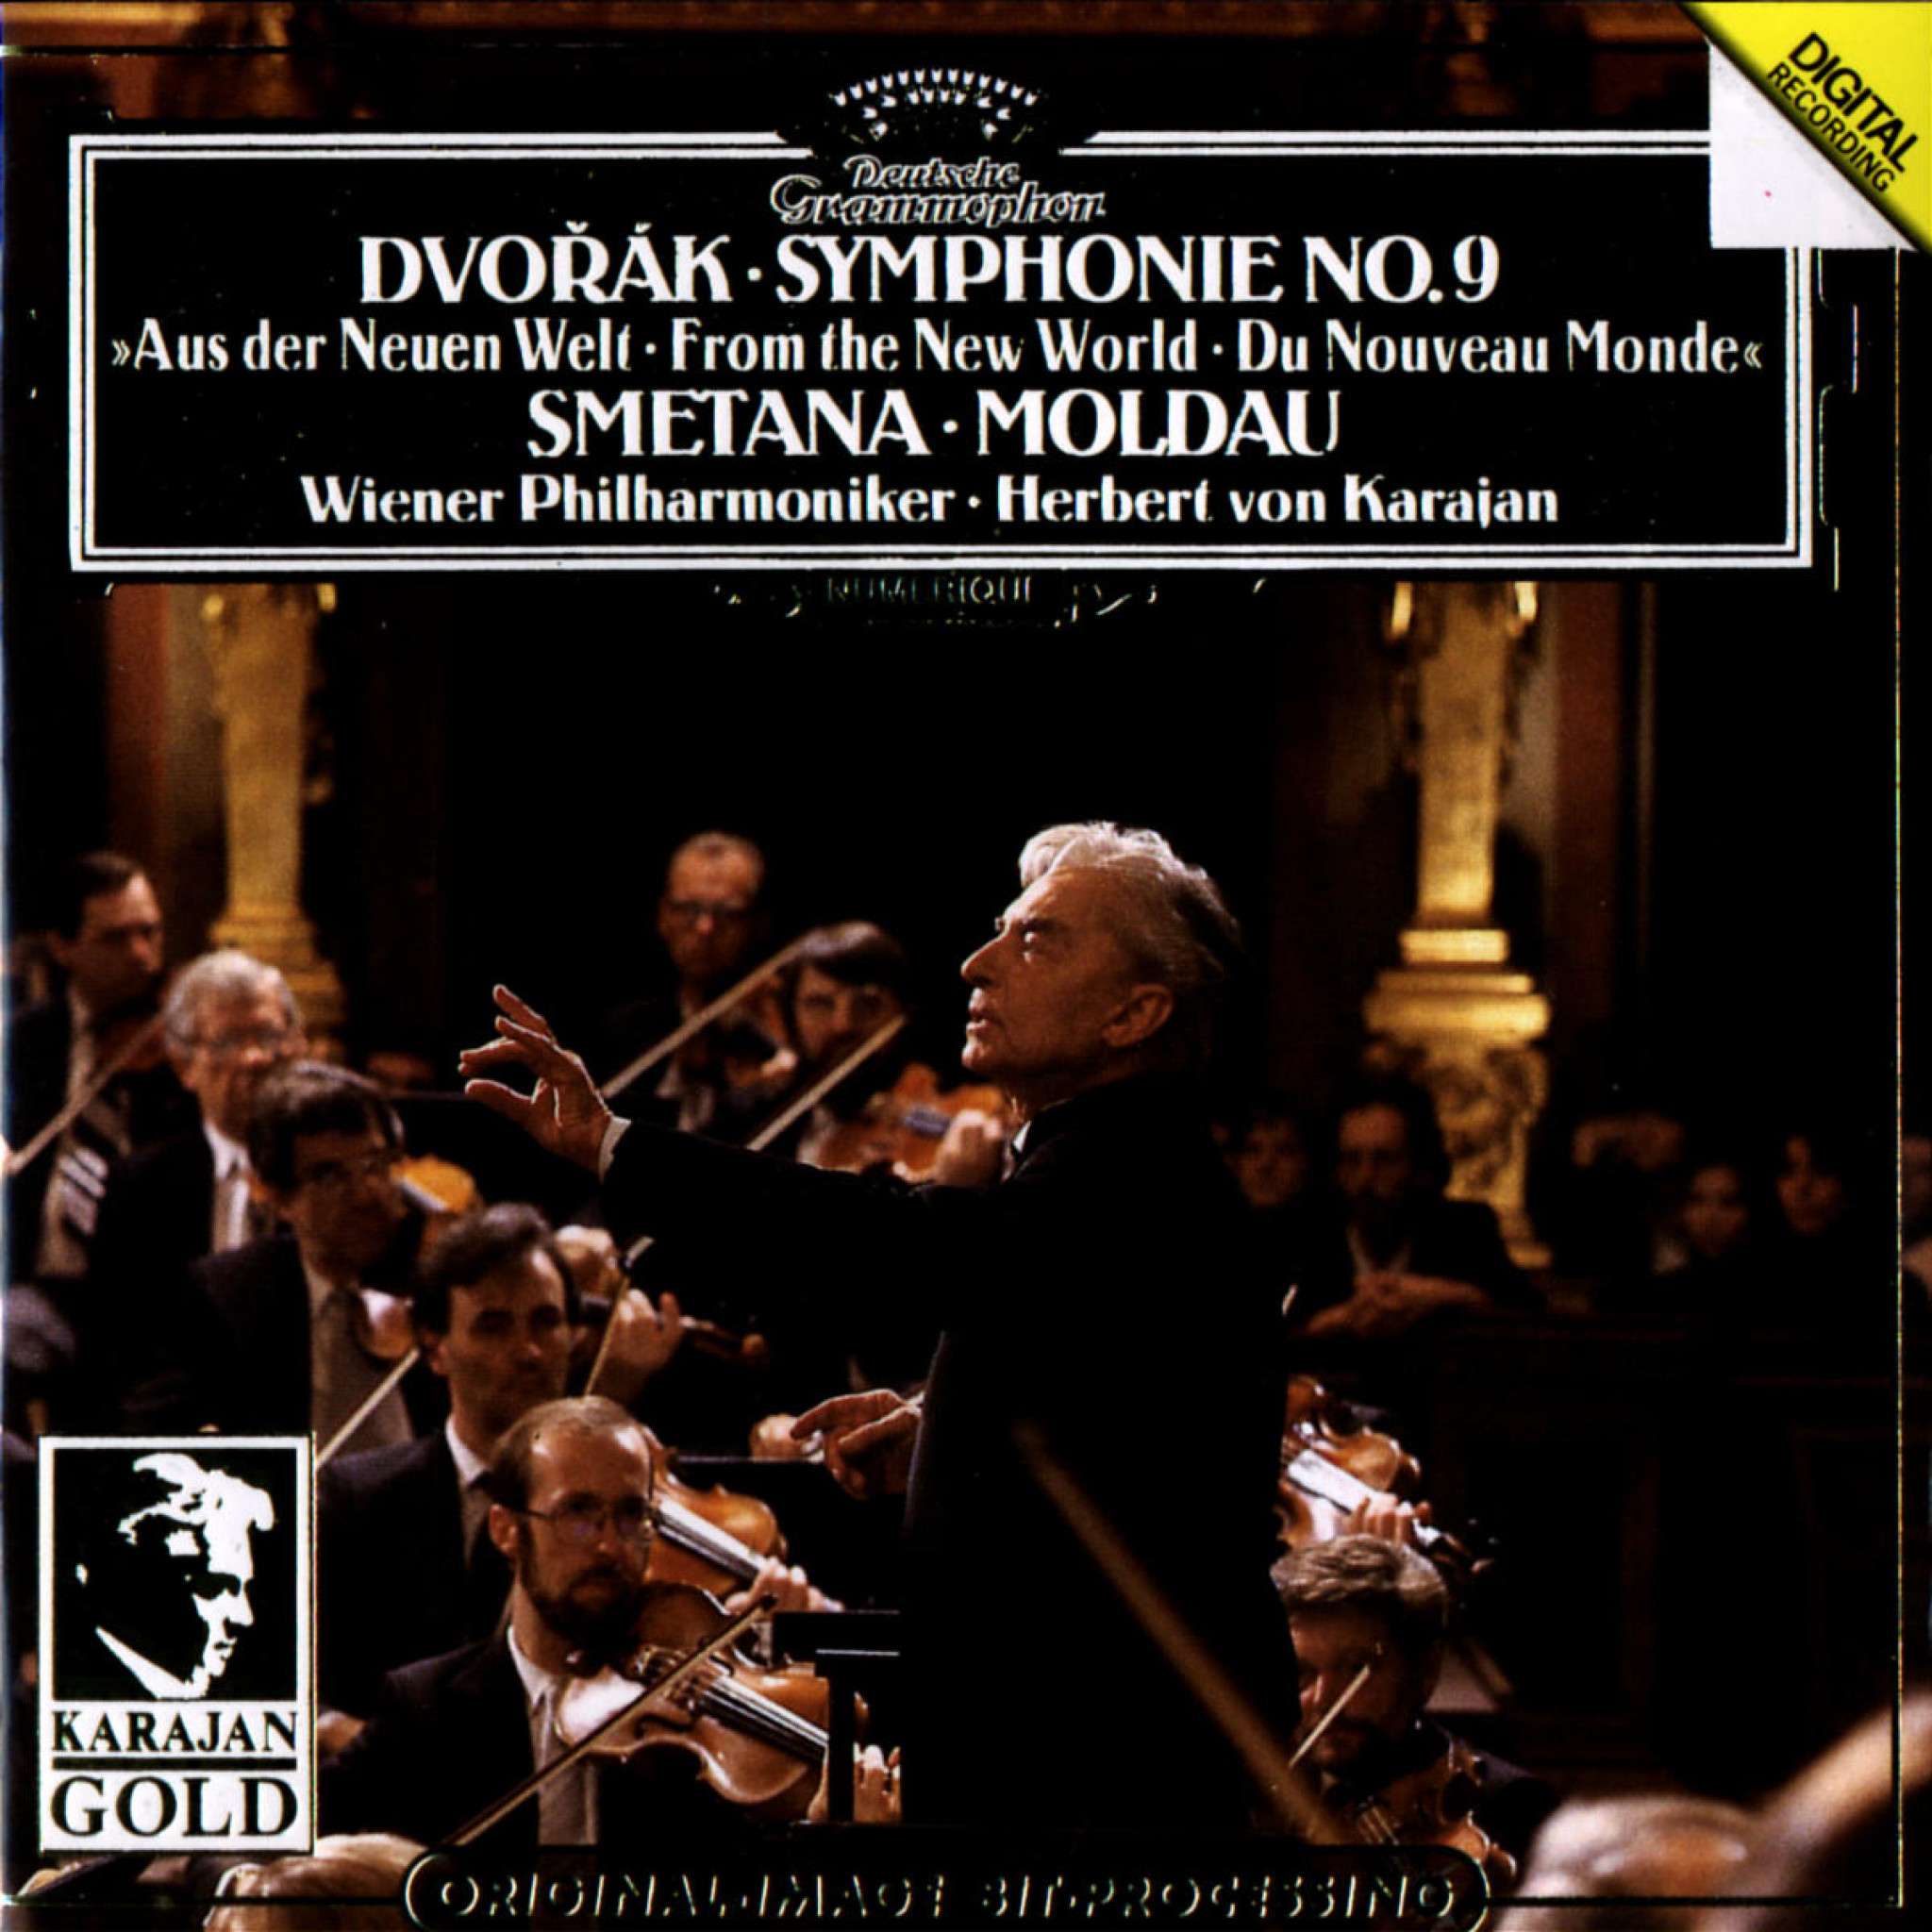 DVOŘÁK Symphony No. 9 SMETANA Moldau/Karajan(1985)